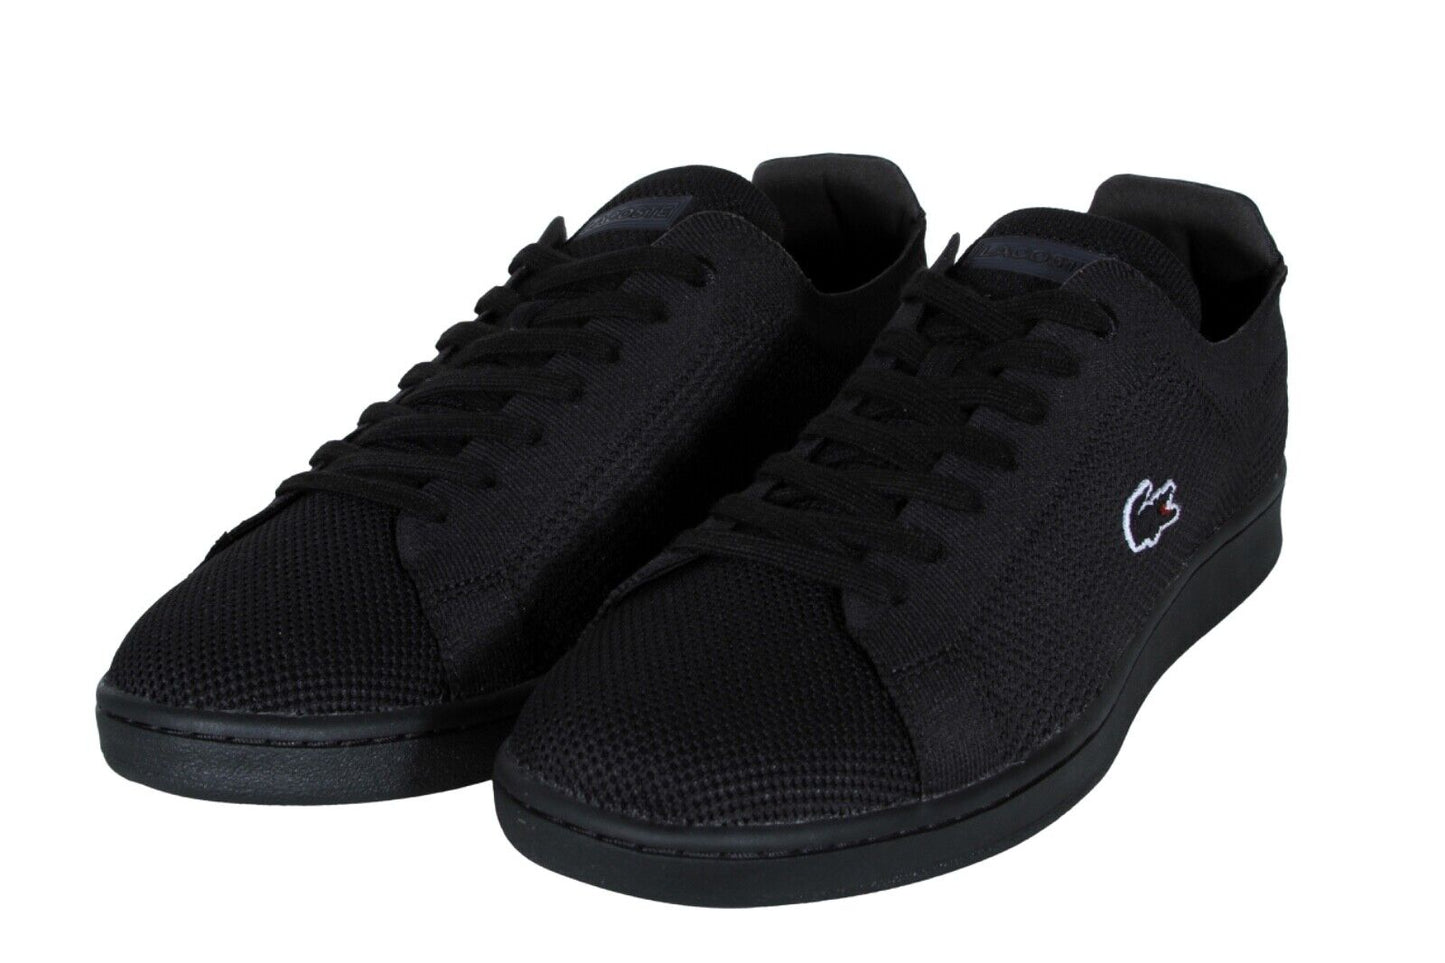 Lacoste Carnaby Piqué 124 1 SMA Men’s Sneakers in Black 747SMA007602H